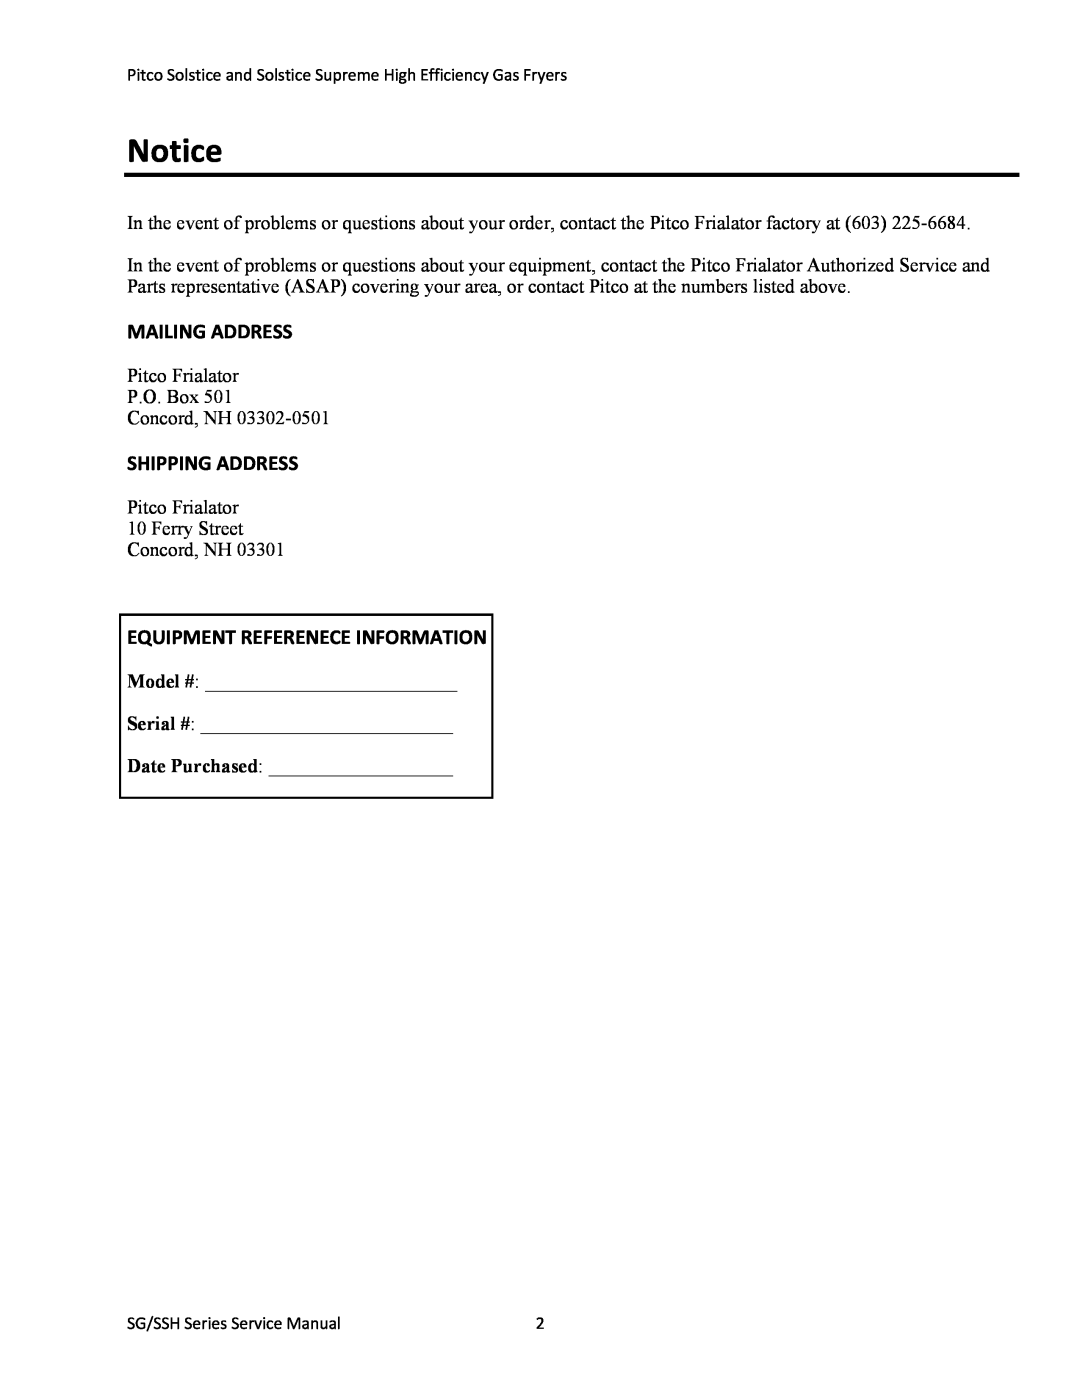 Pitco Frialator L22-345 manual Notice, Mailing Address, Shipping Address, Equipment Referenece Information 